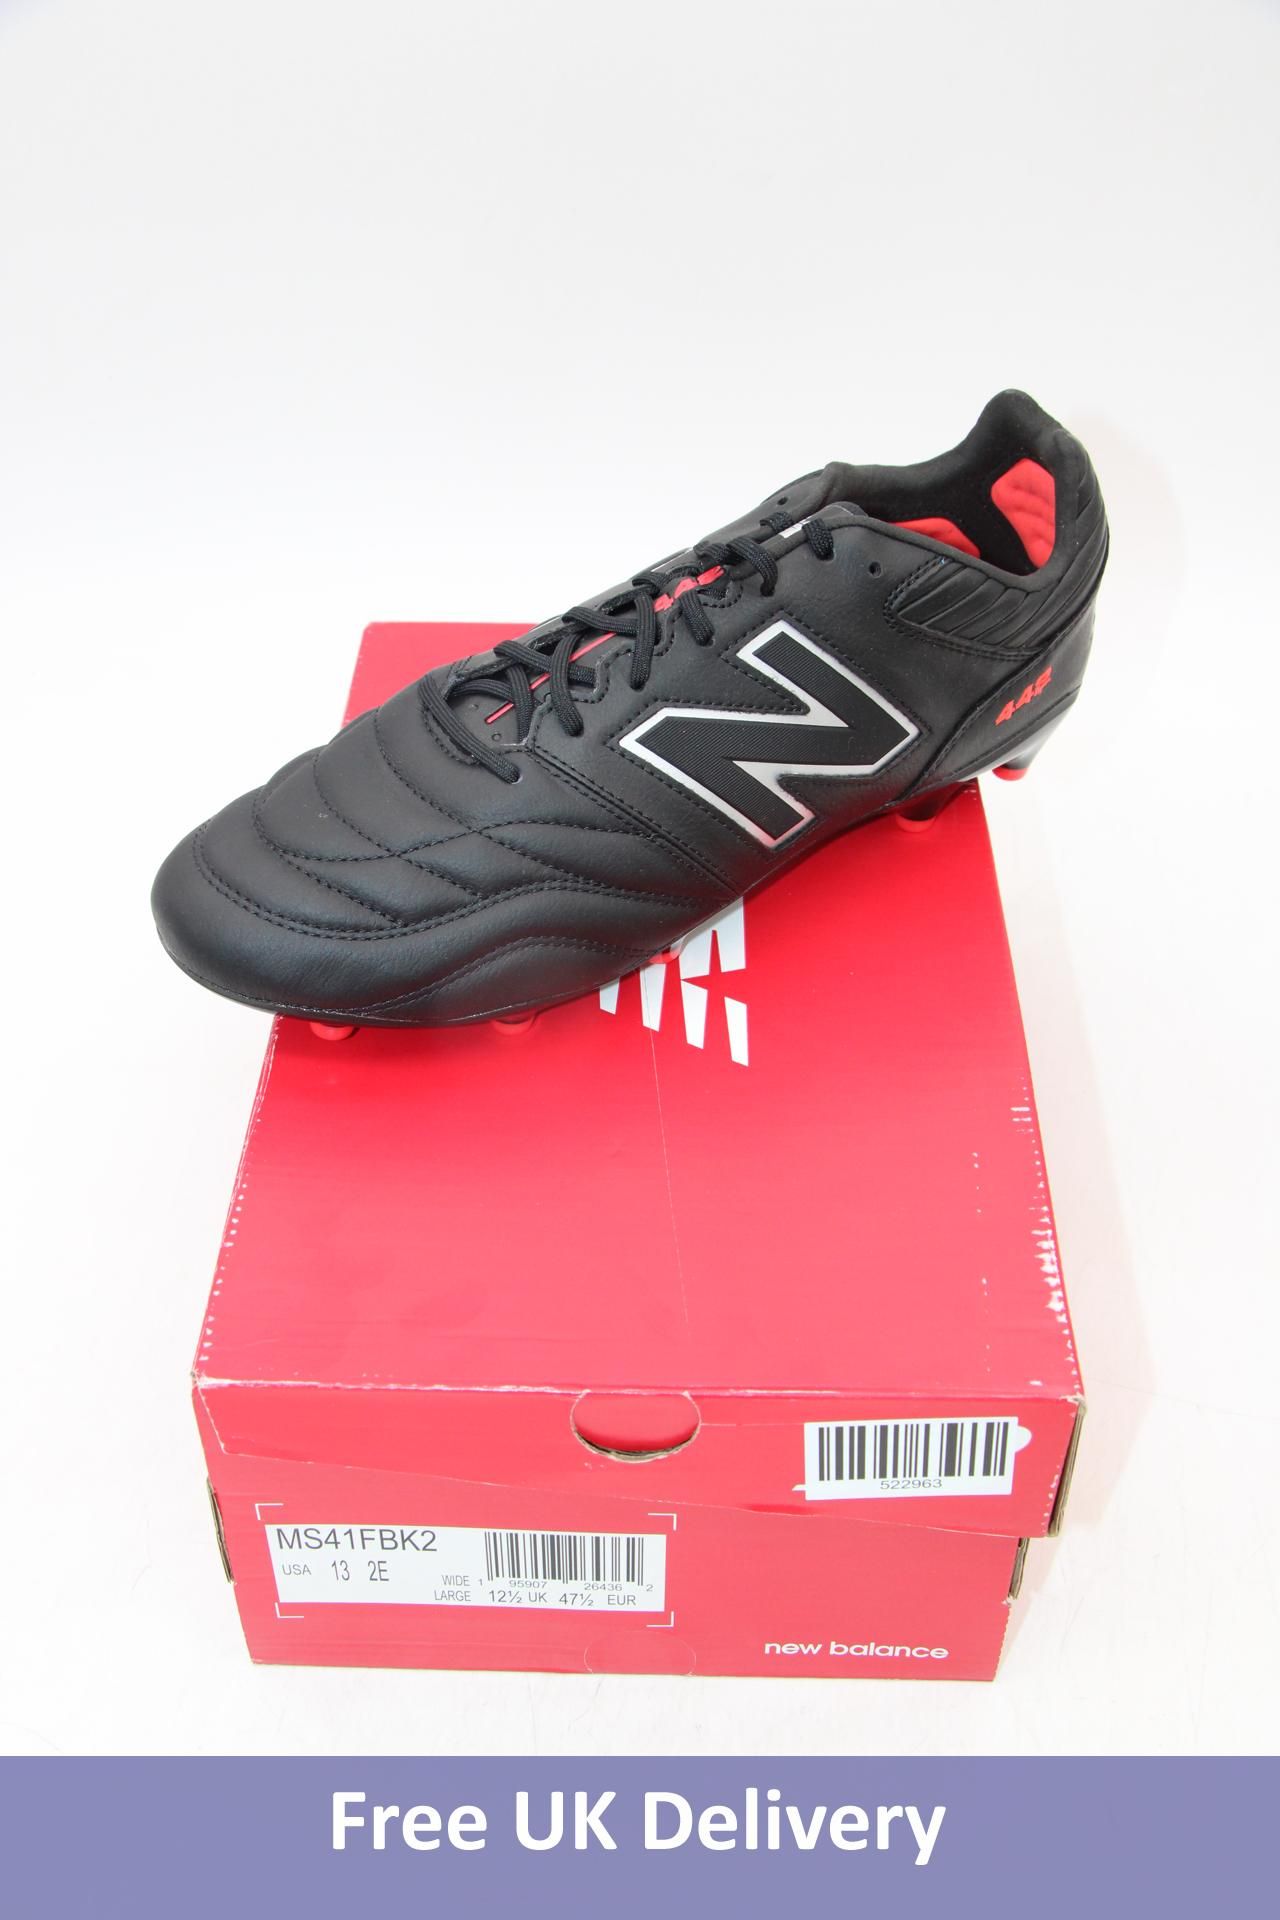 New Balance, 442 V2, Pro Football Boots, Black/Red/Silver, UK 12.5. Box damaged